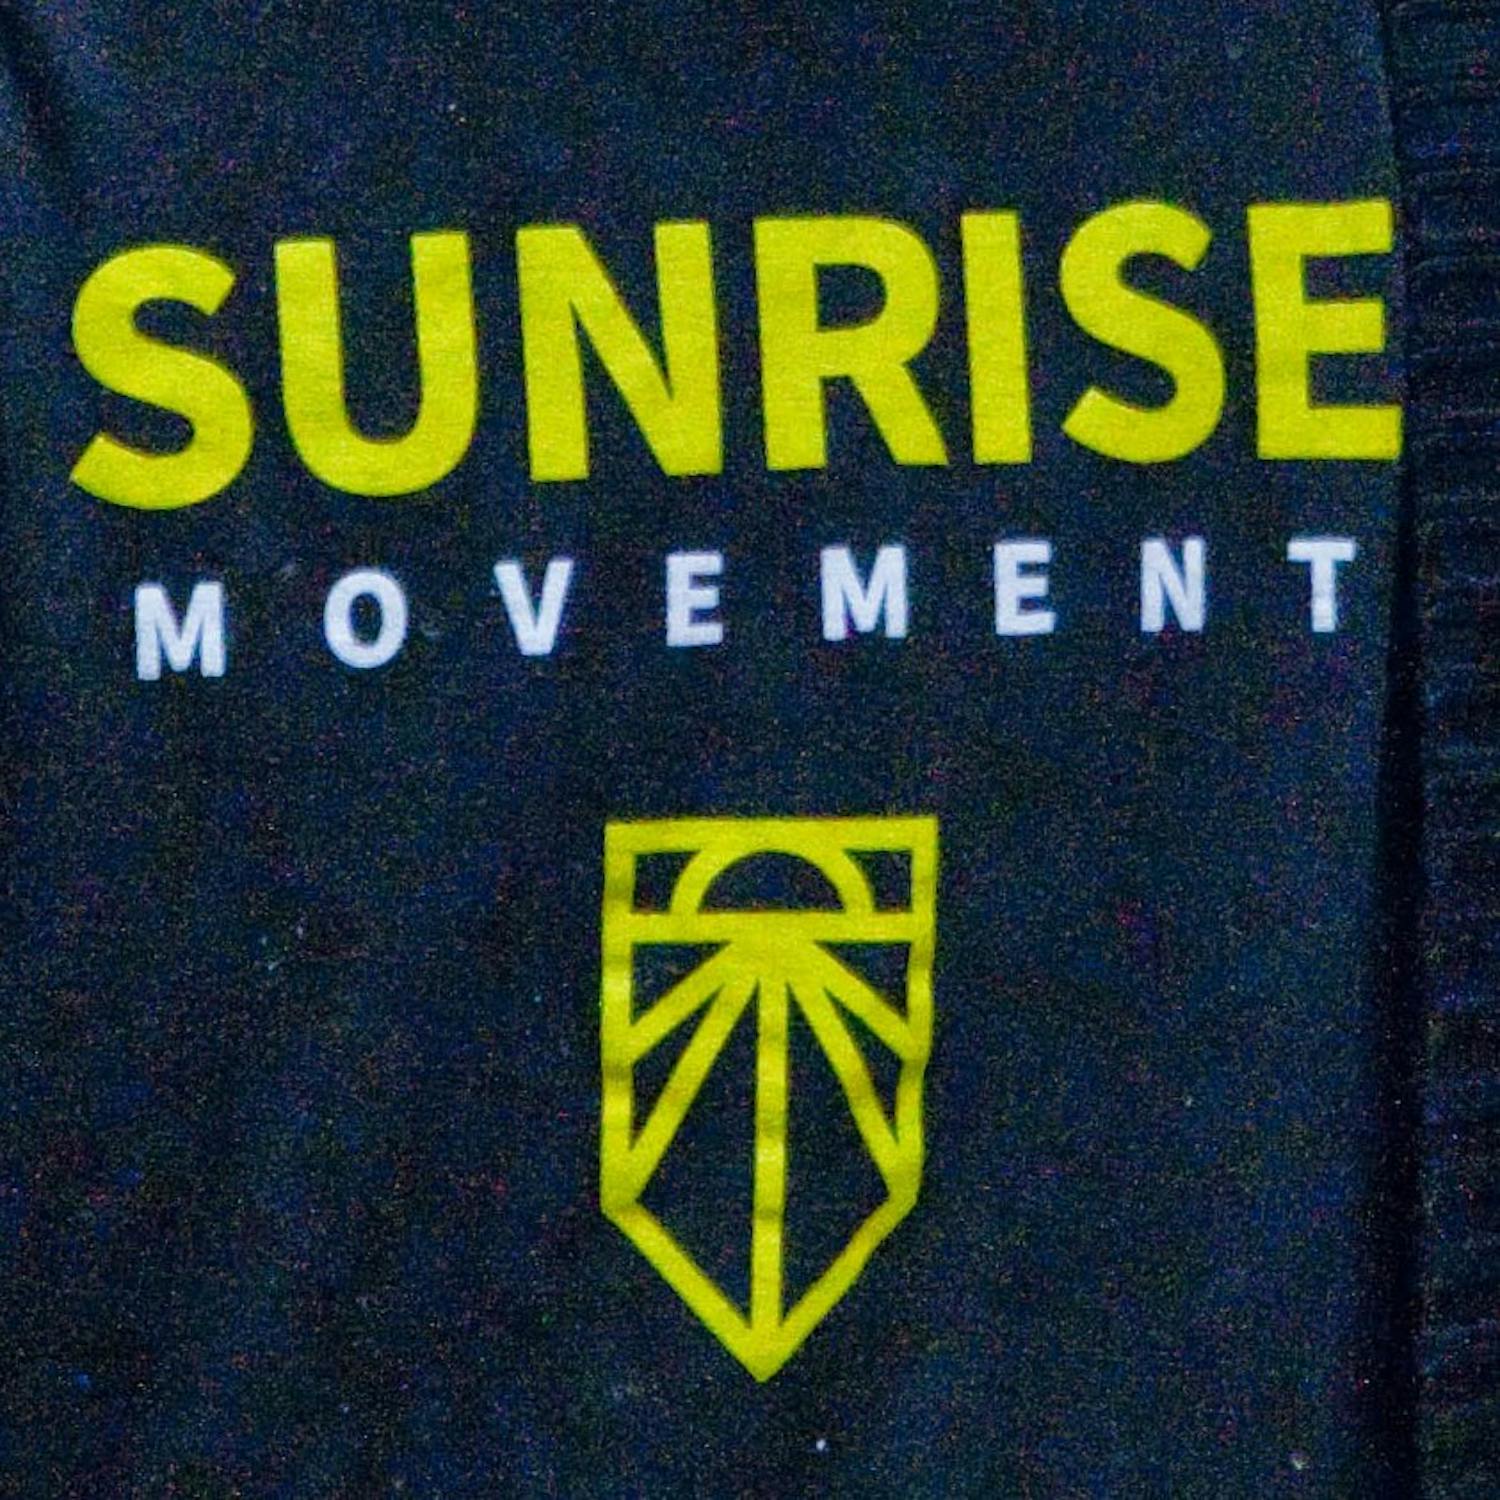 Sunrise_Movement_logo_on_a_T-shirt,_2019_(cropped).jpg